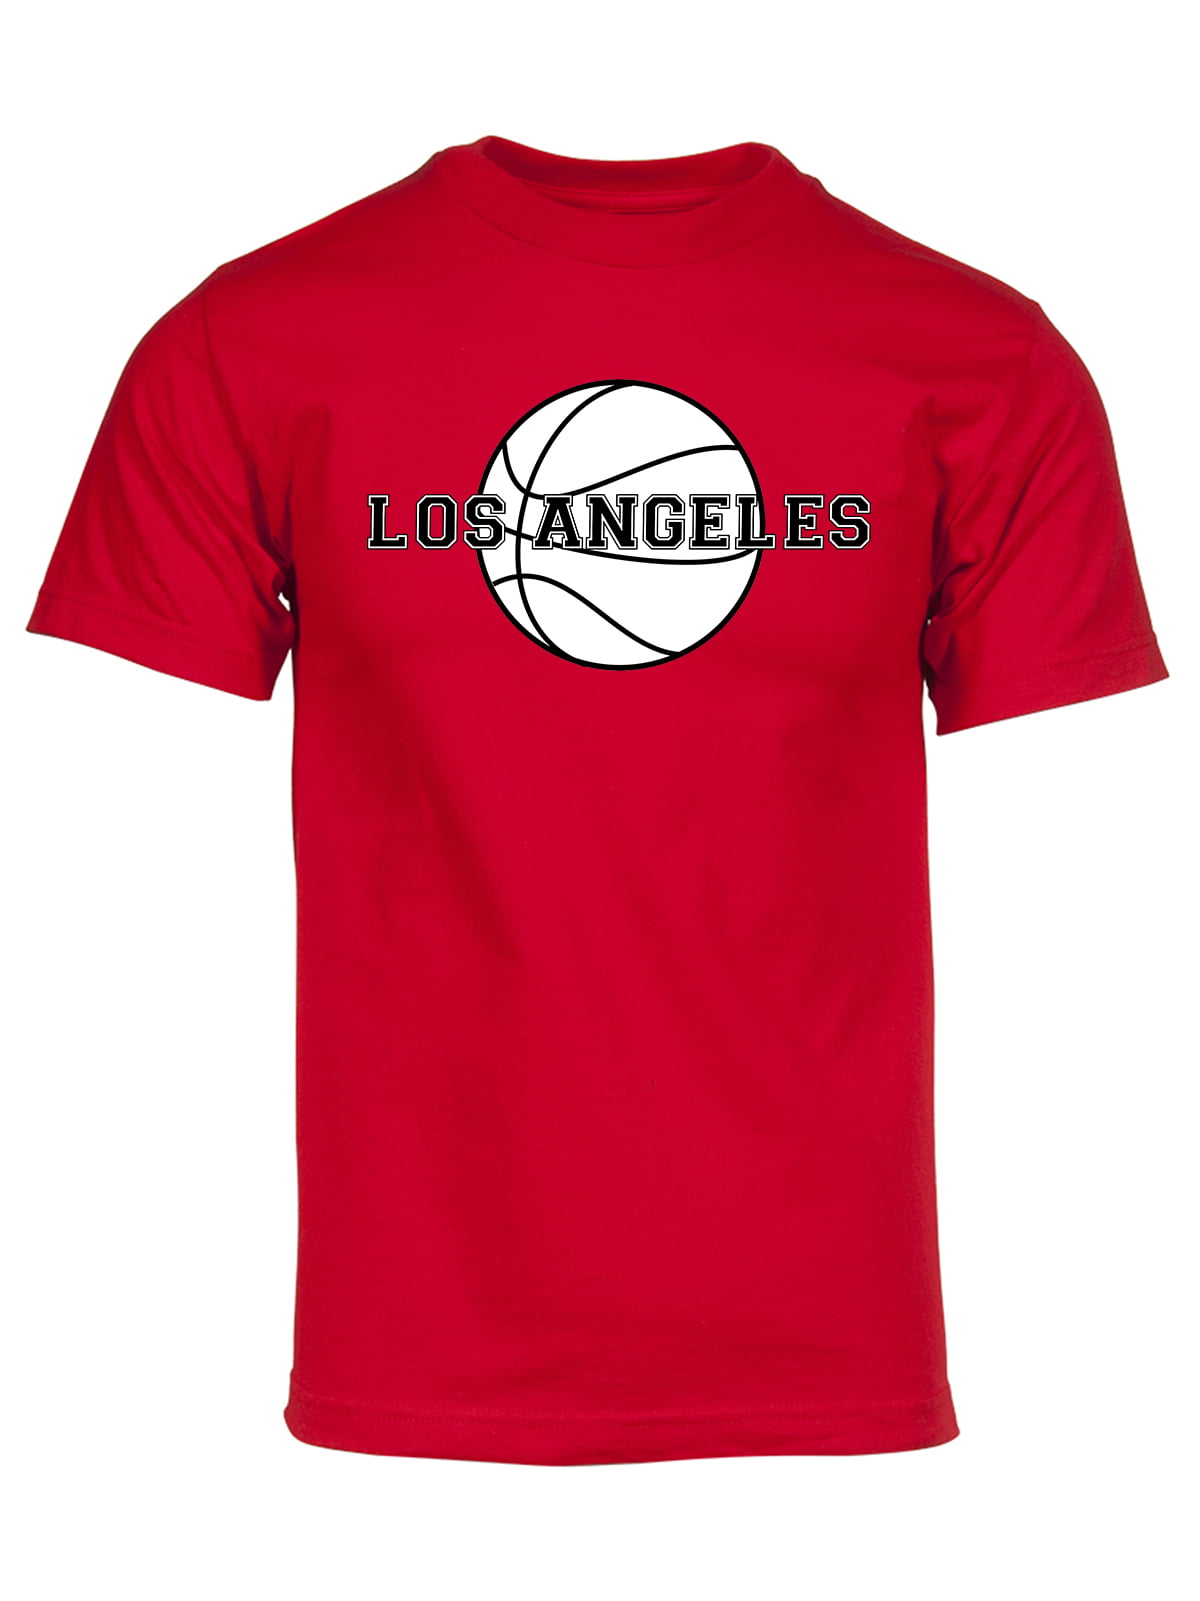 Gravity Threads Mens Los Angeles Basketball Short-Sleeve T-Shirt - Red - M